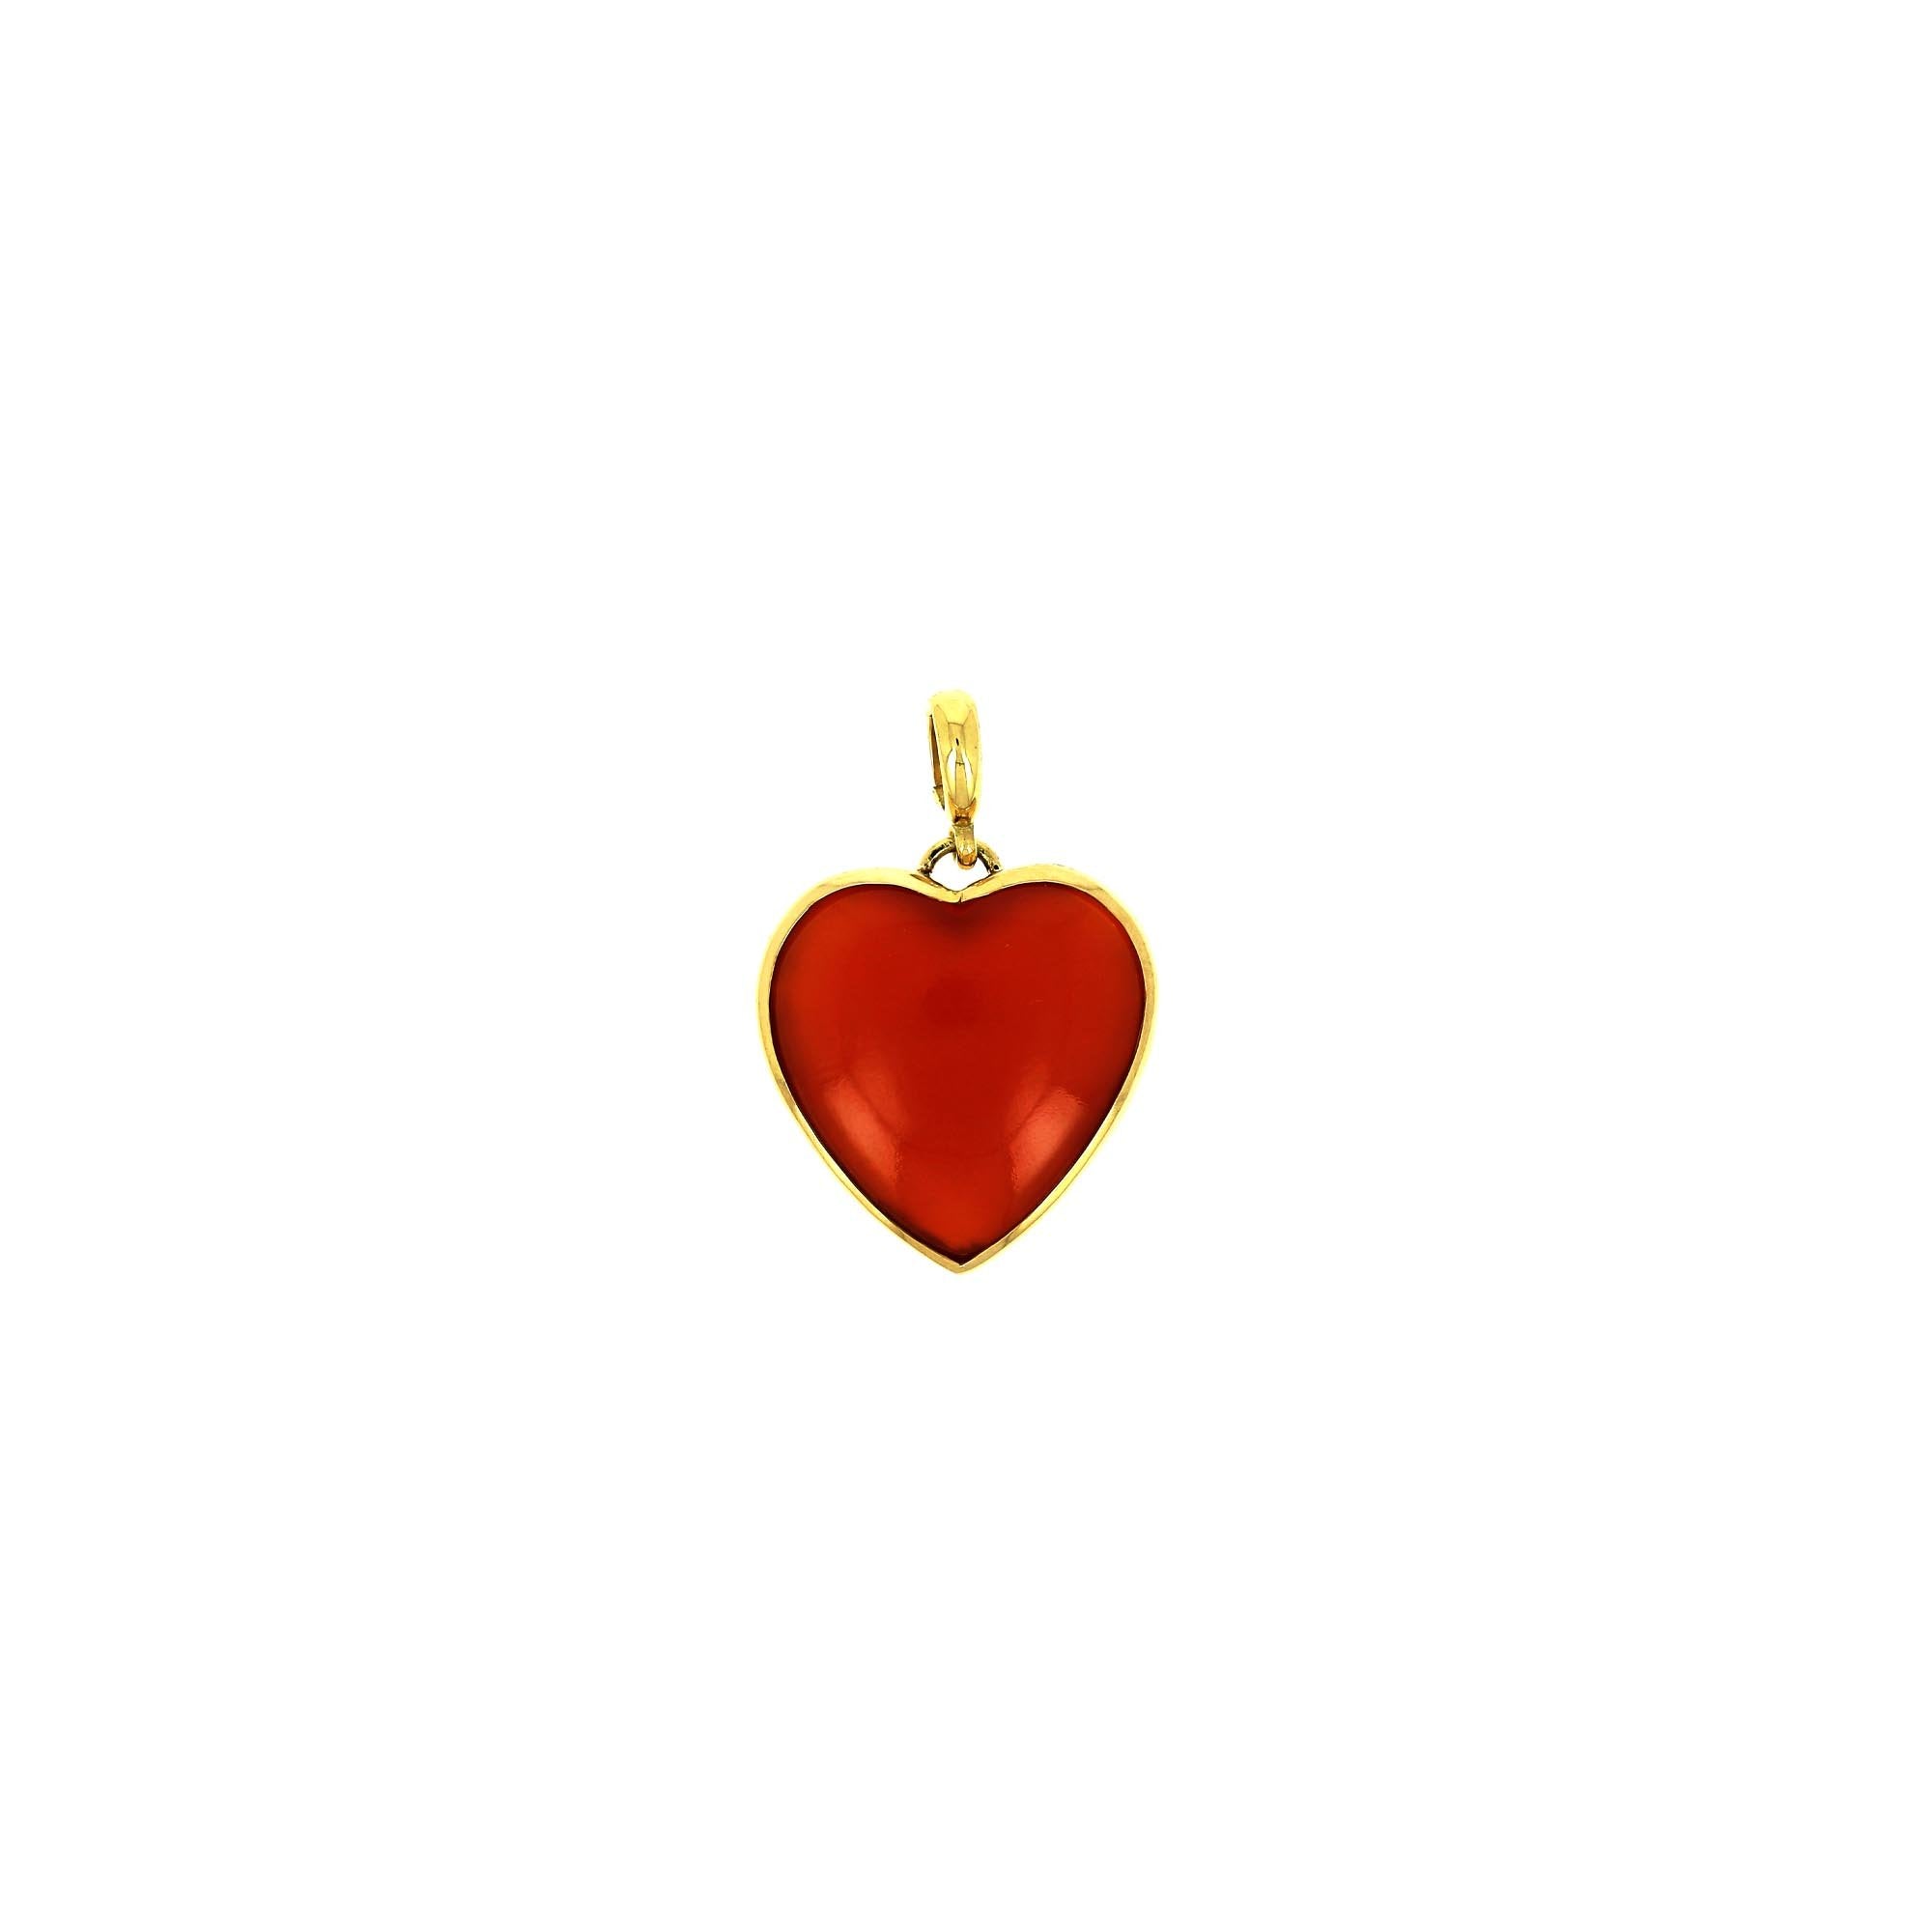 Carnelian Heart Pendant